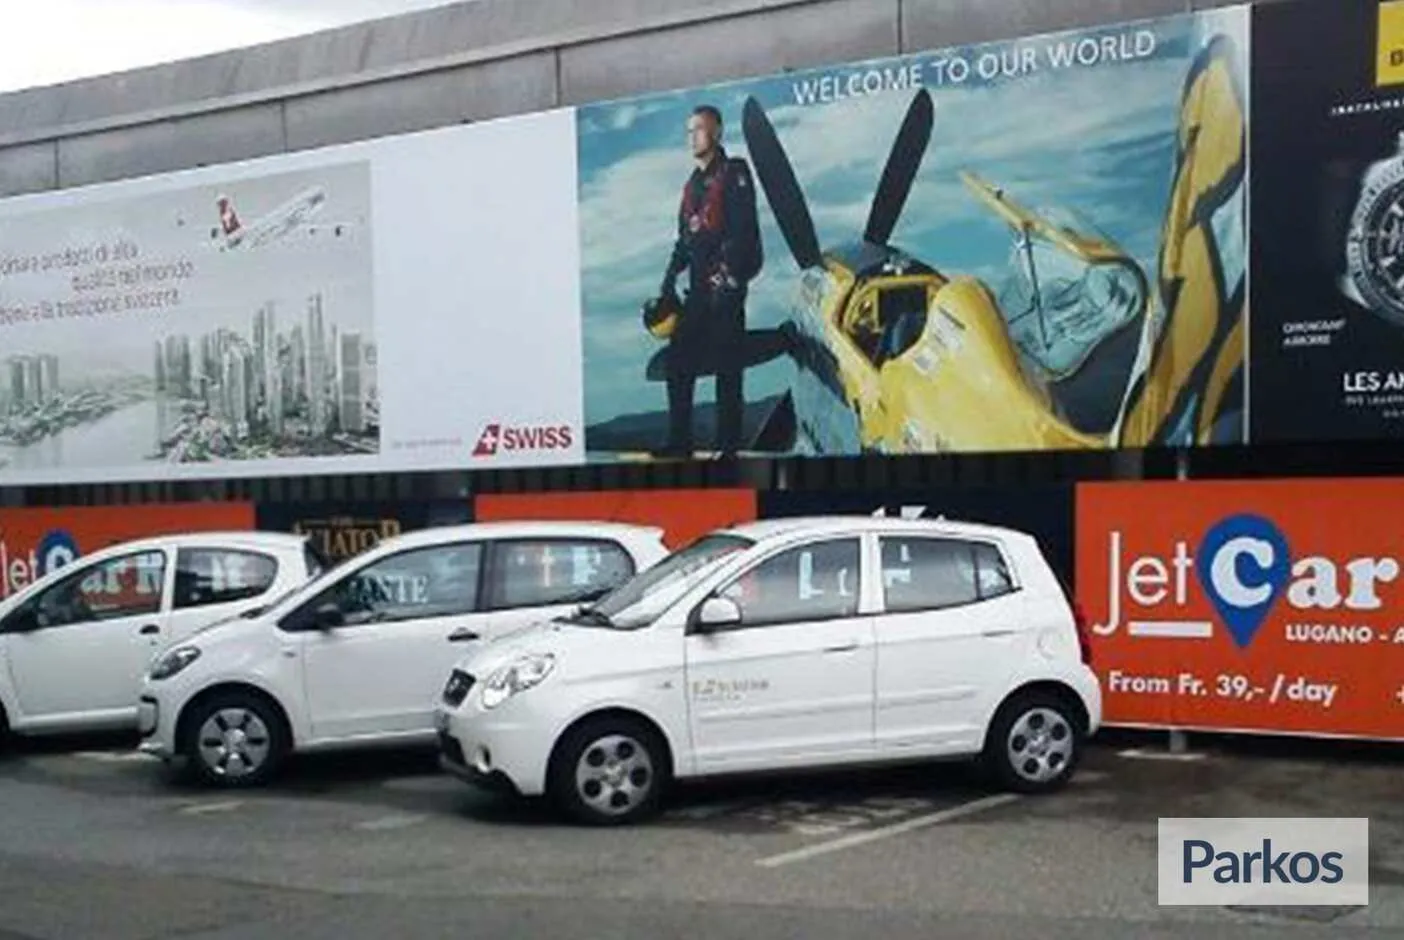 JetCarPark - Parking Lugano Airport - picture 1